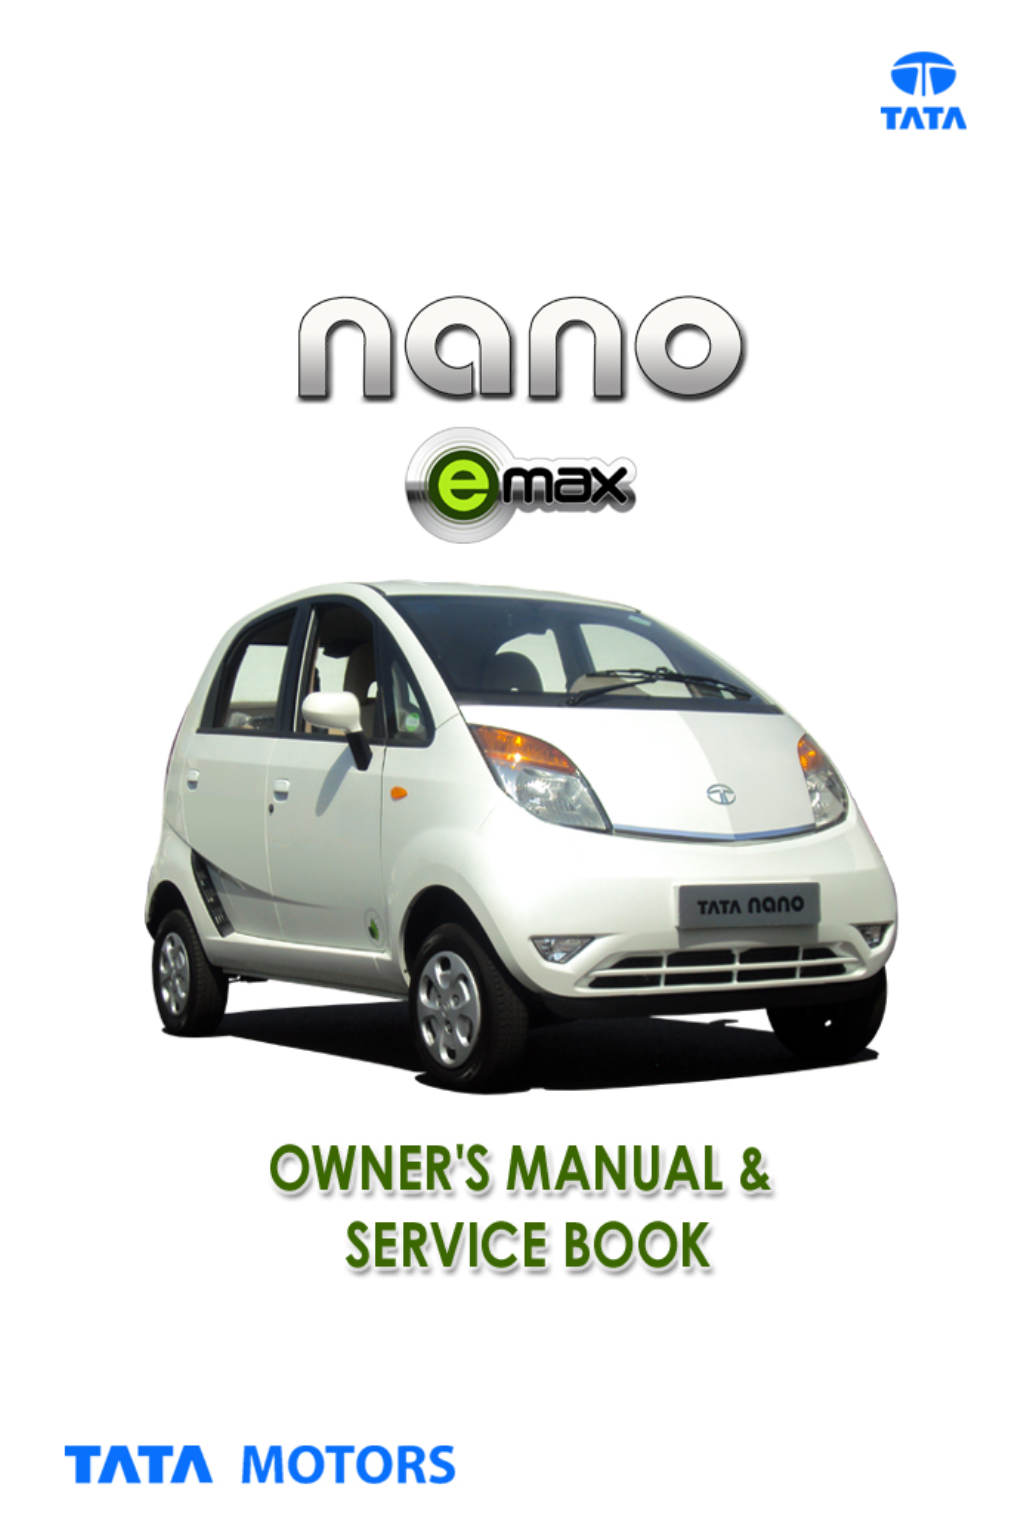 TATA NANO Owner's Manual & Service Book